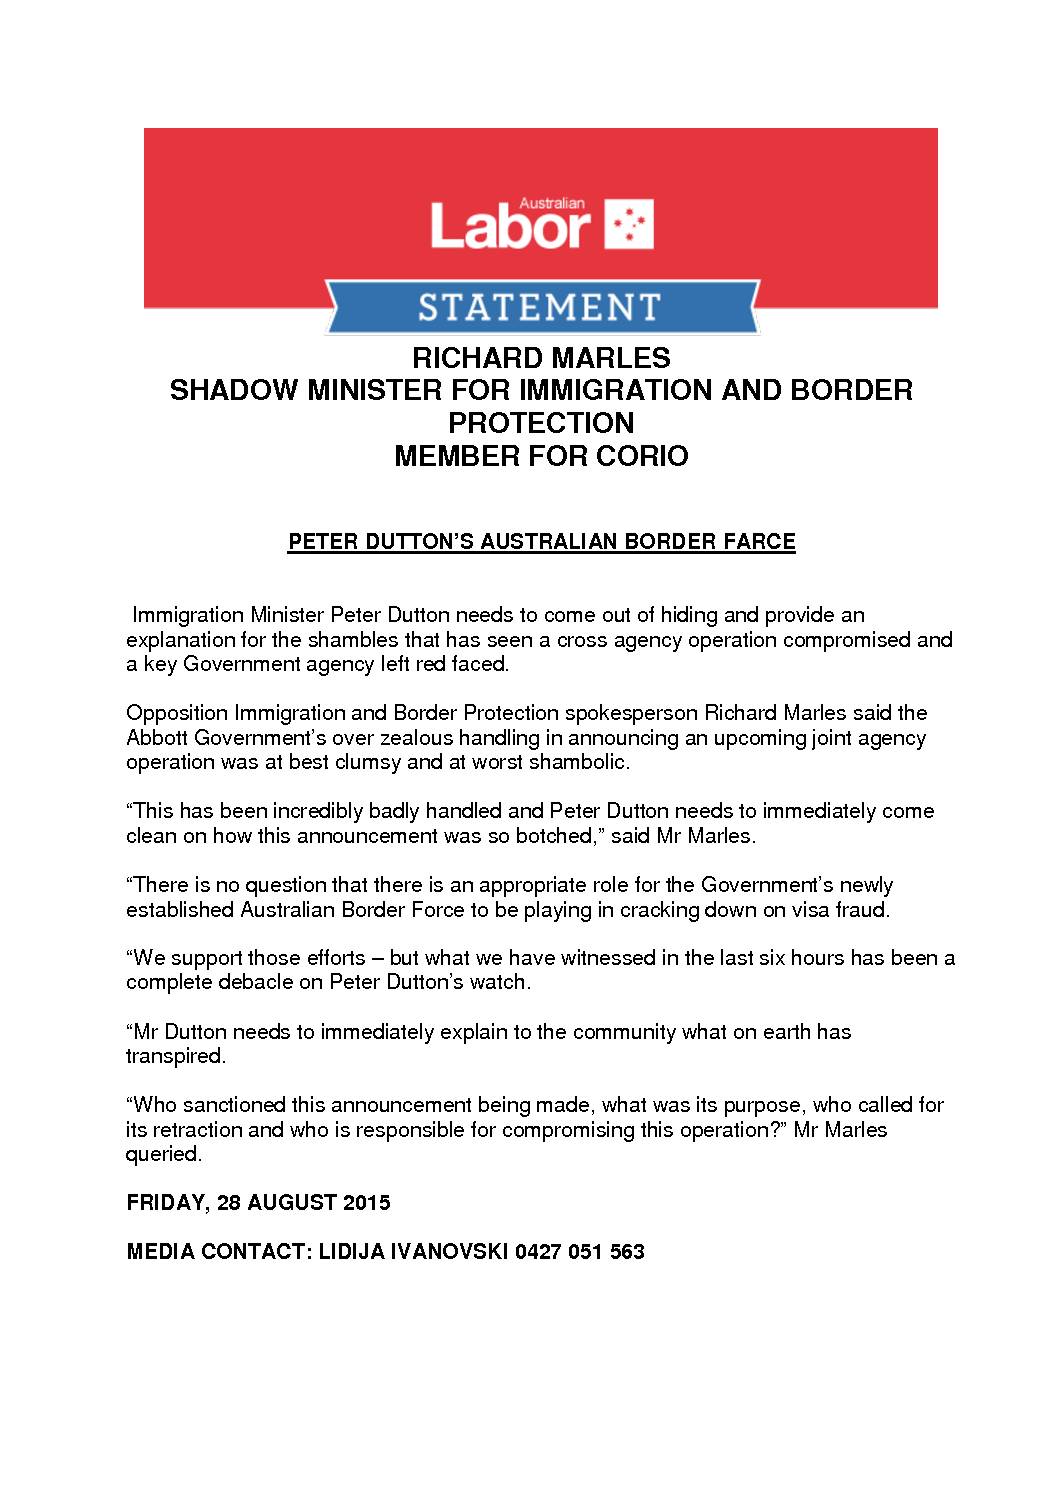 15.08.28 Peter Dutton’s Australian Border Farce